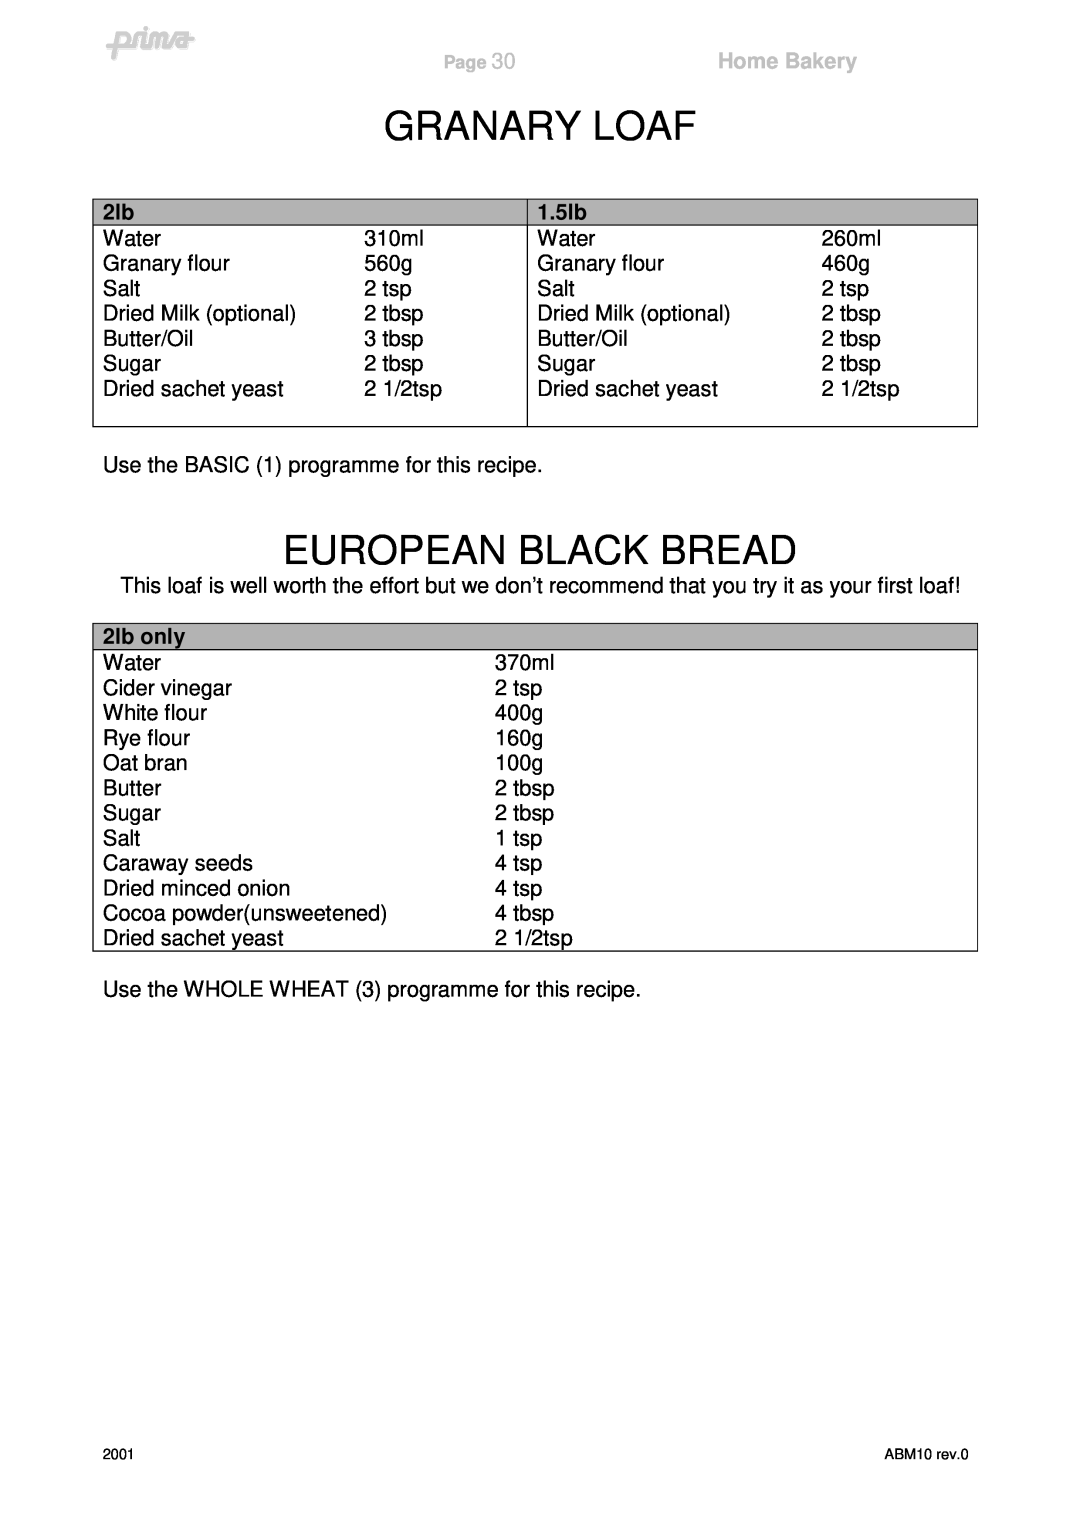 Prima ABM10 instruction manual Granary Loaf, European Black Bread, Home Bakery, 1.5lb, 2lb only 